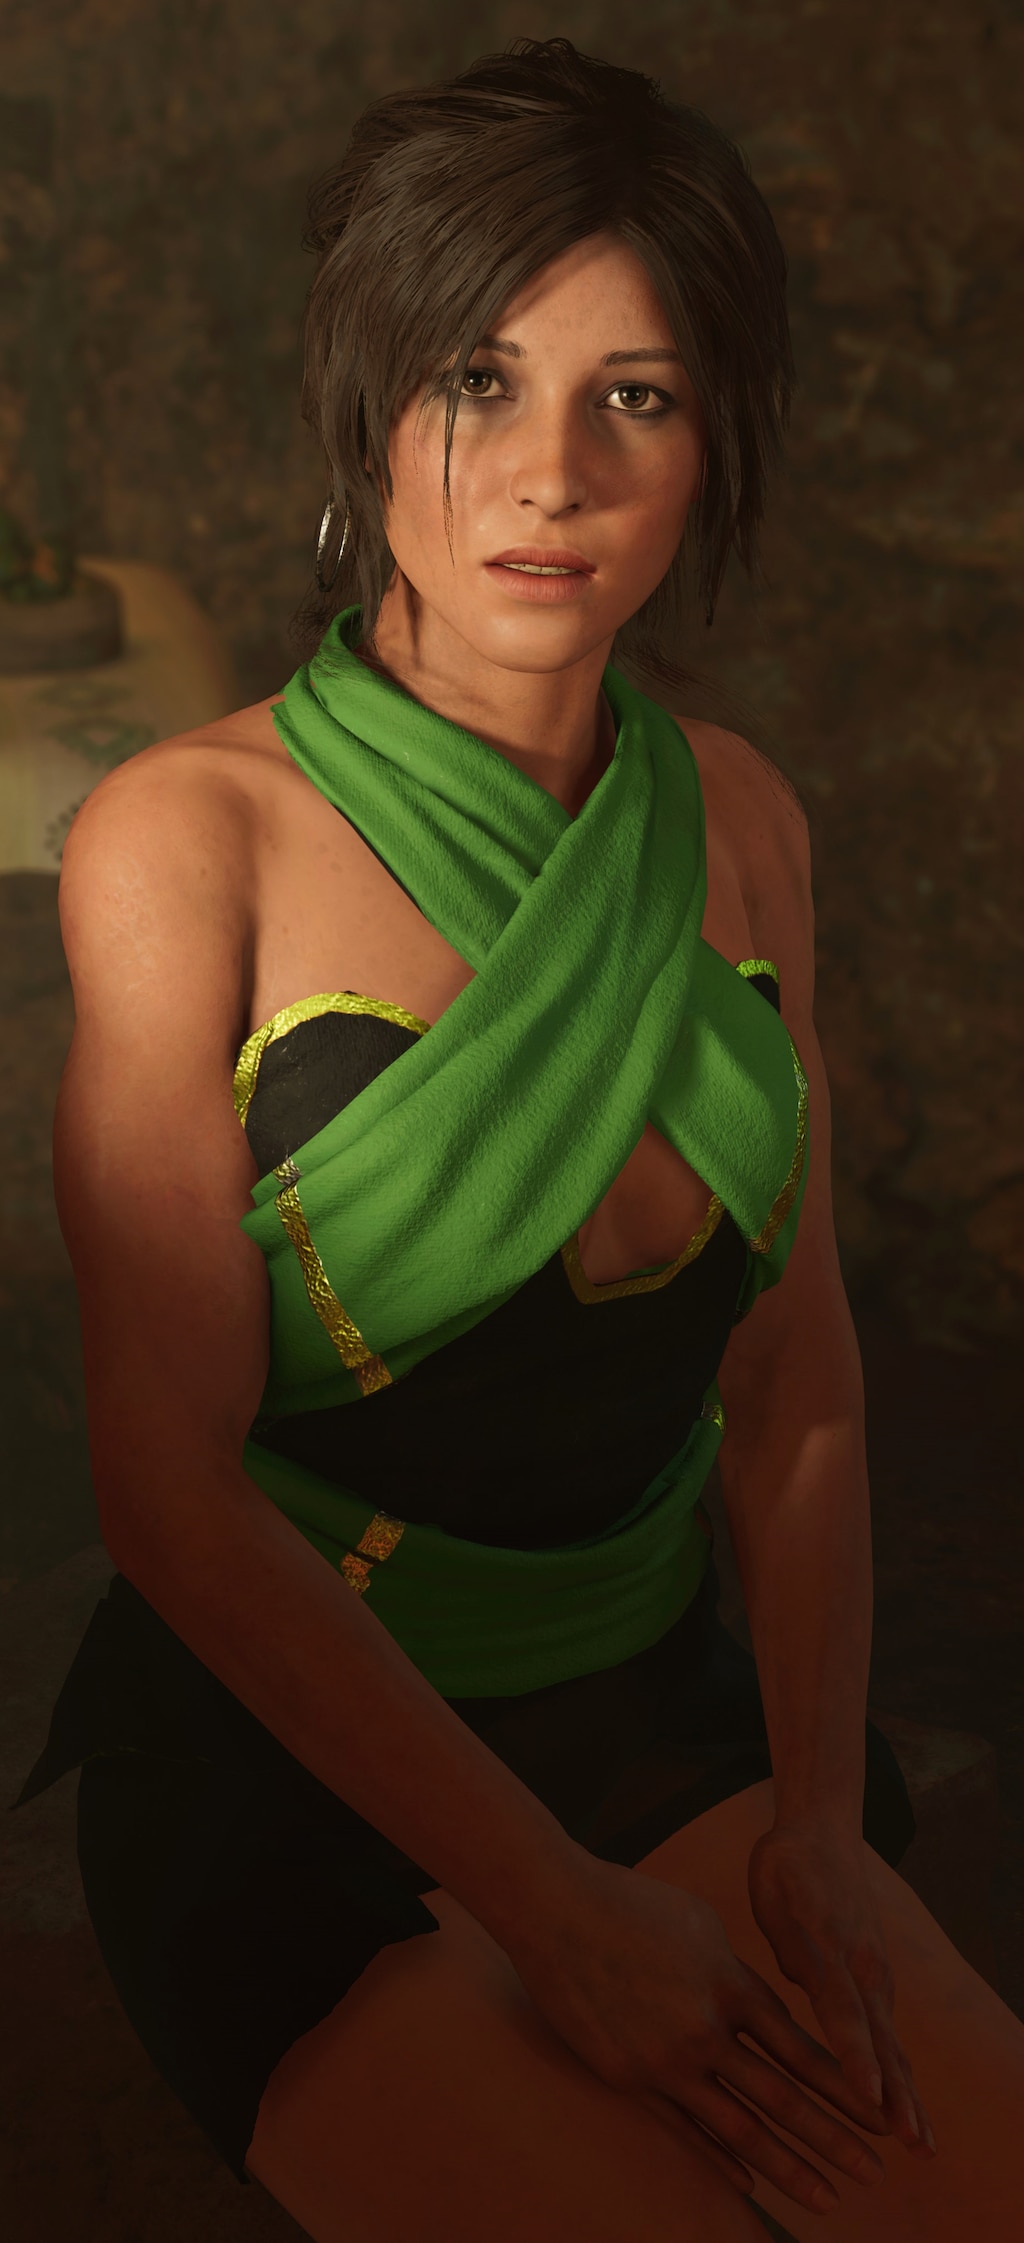 Comunidade Steam :: Tomb Raider